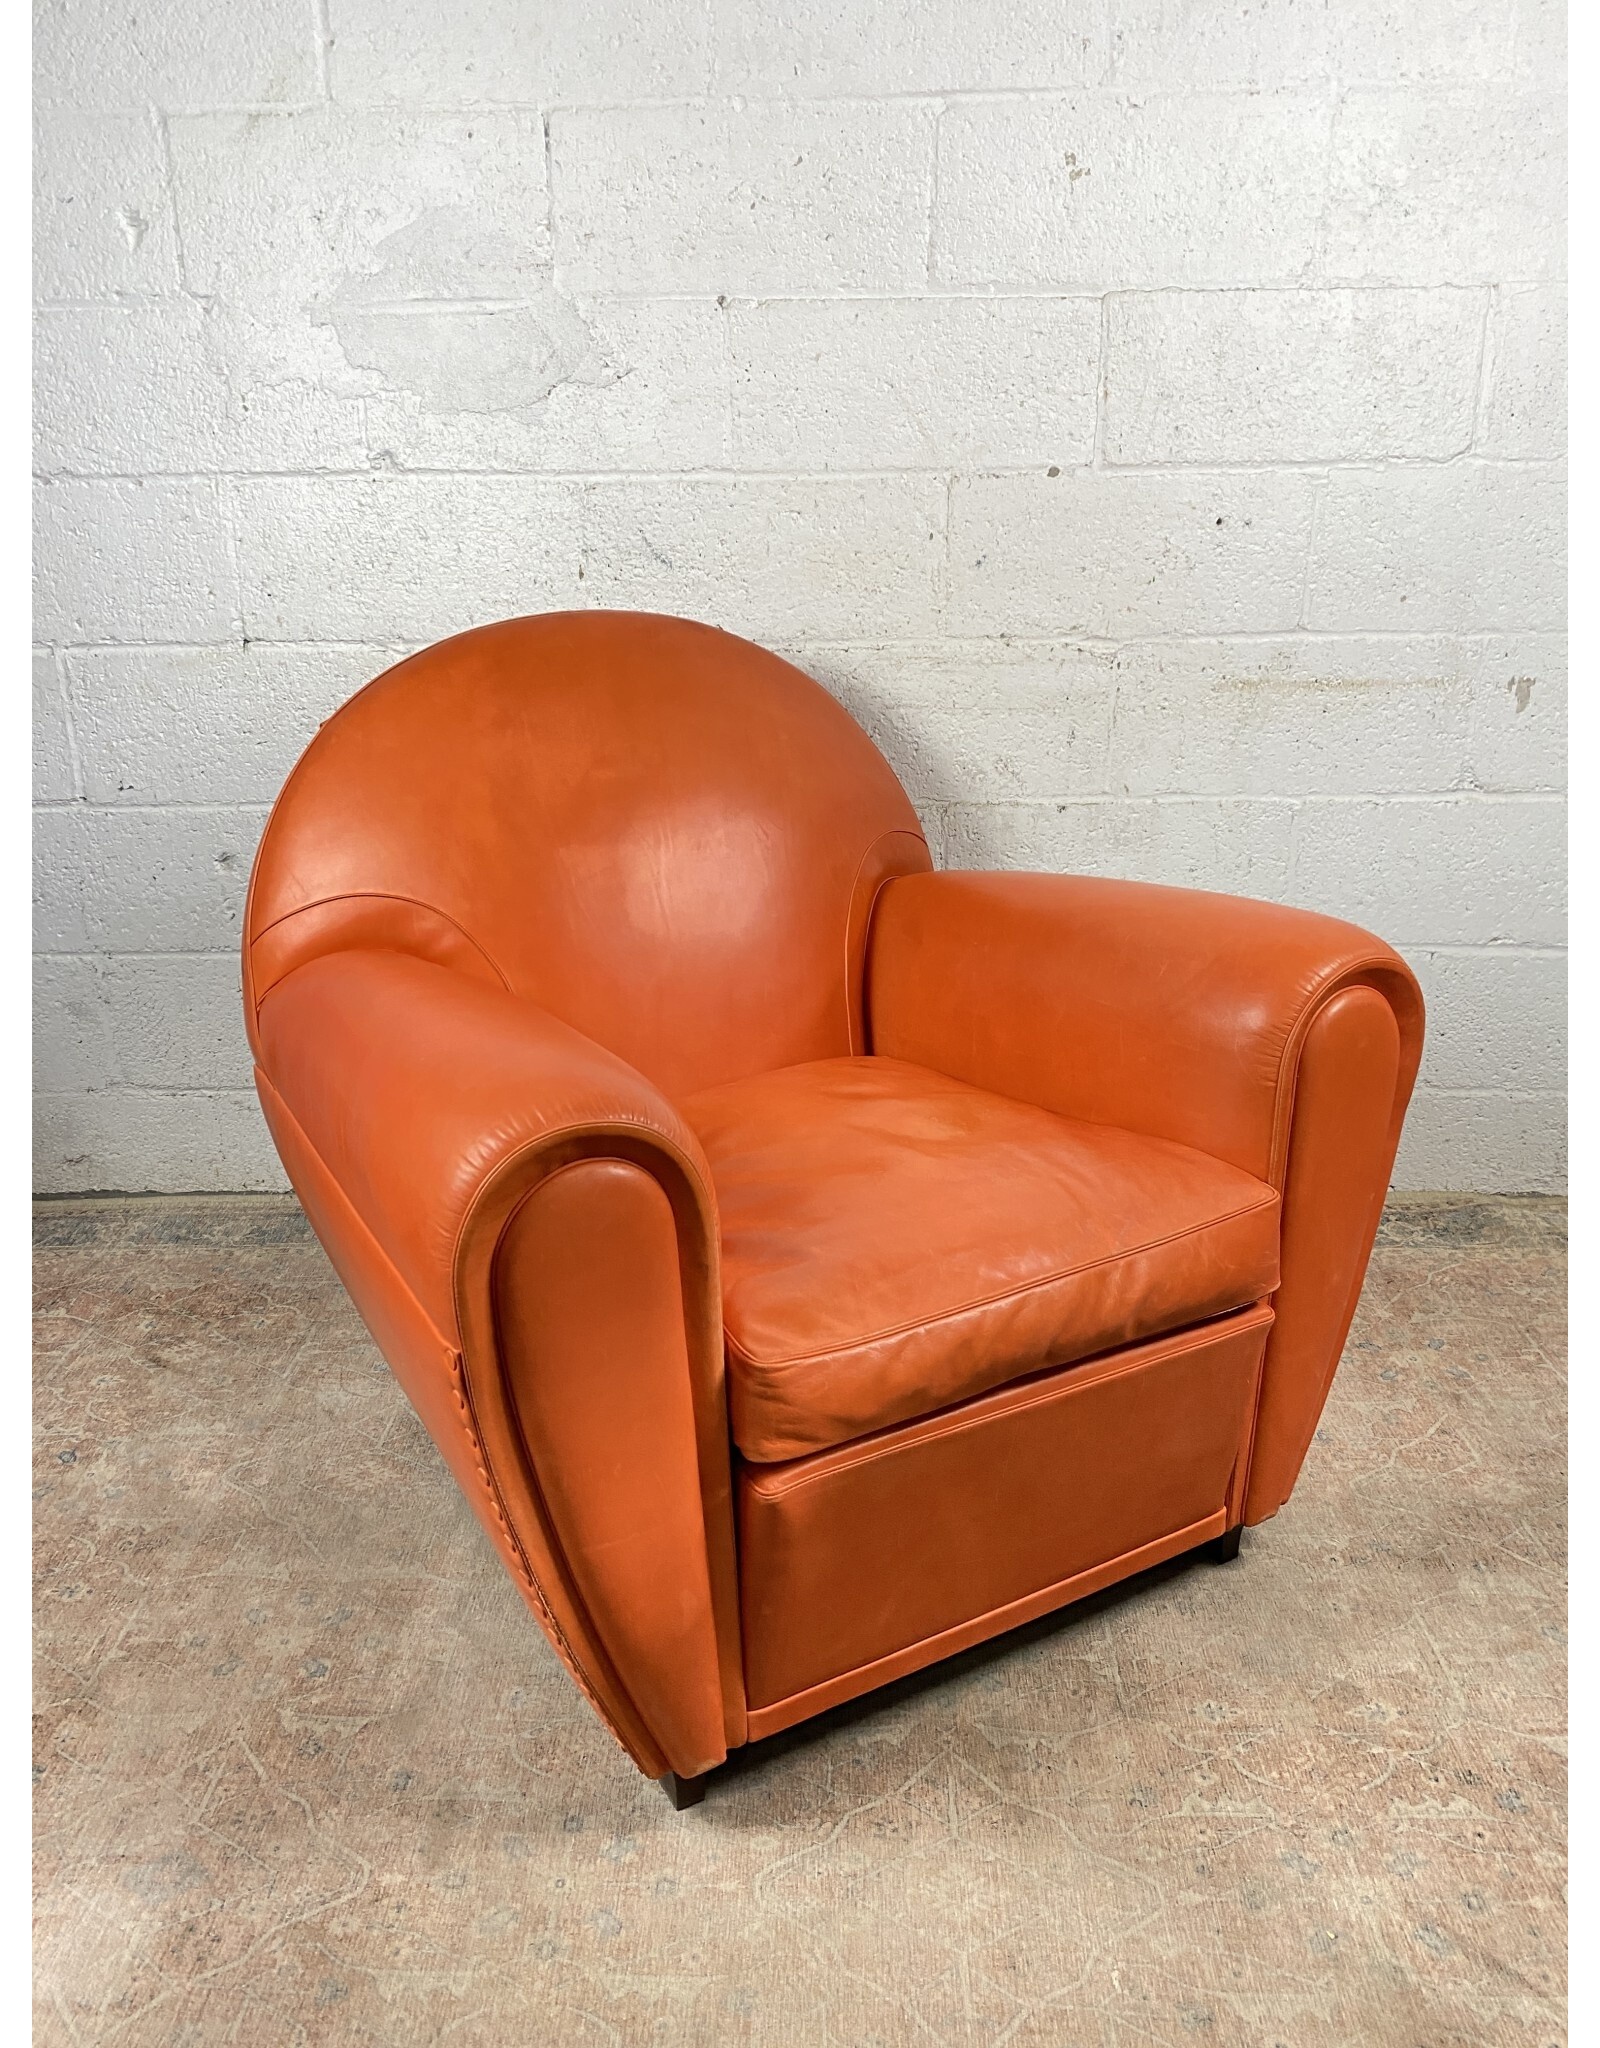 Poltrona Frau Vanity Fair Lounge Armchair, Orioles Orange